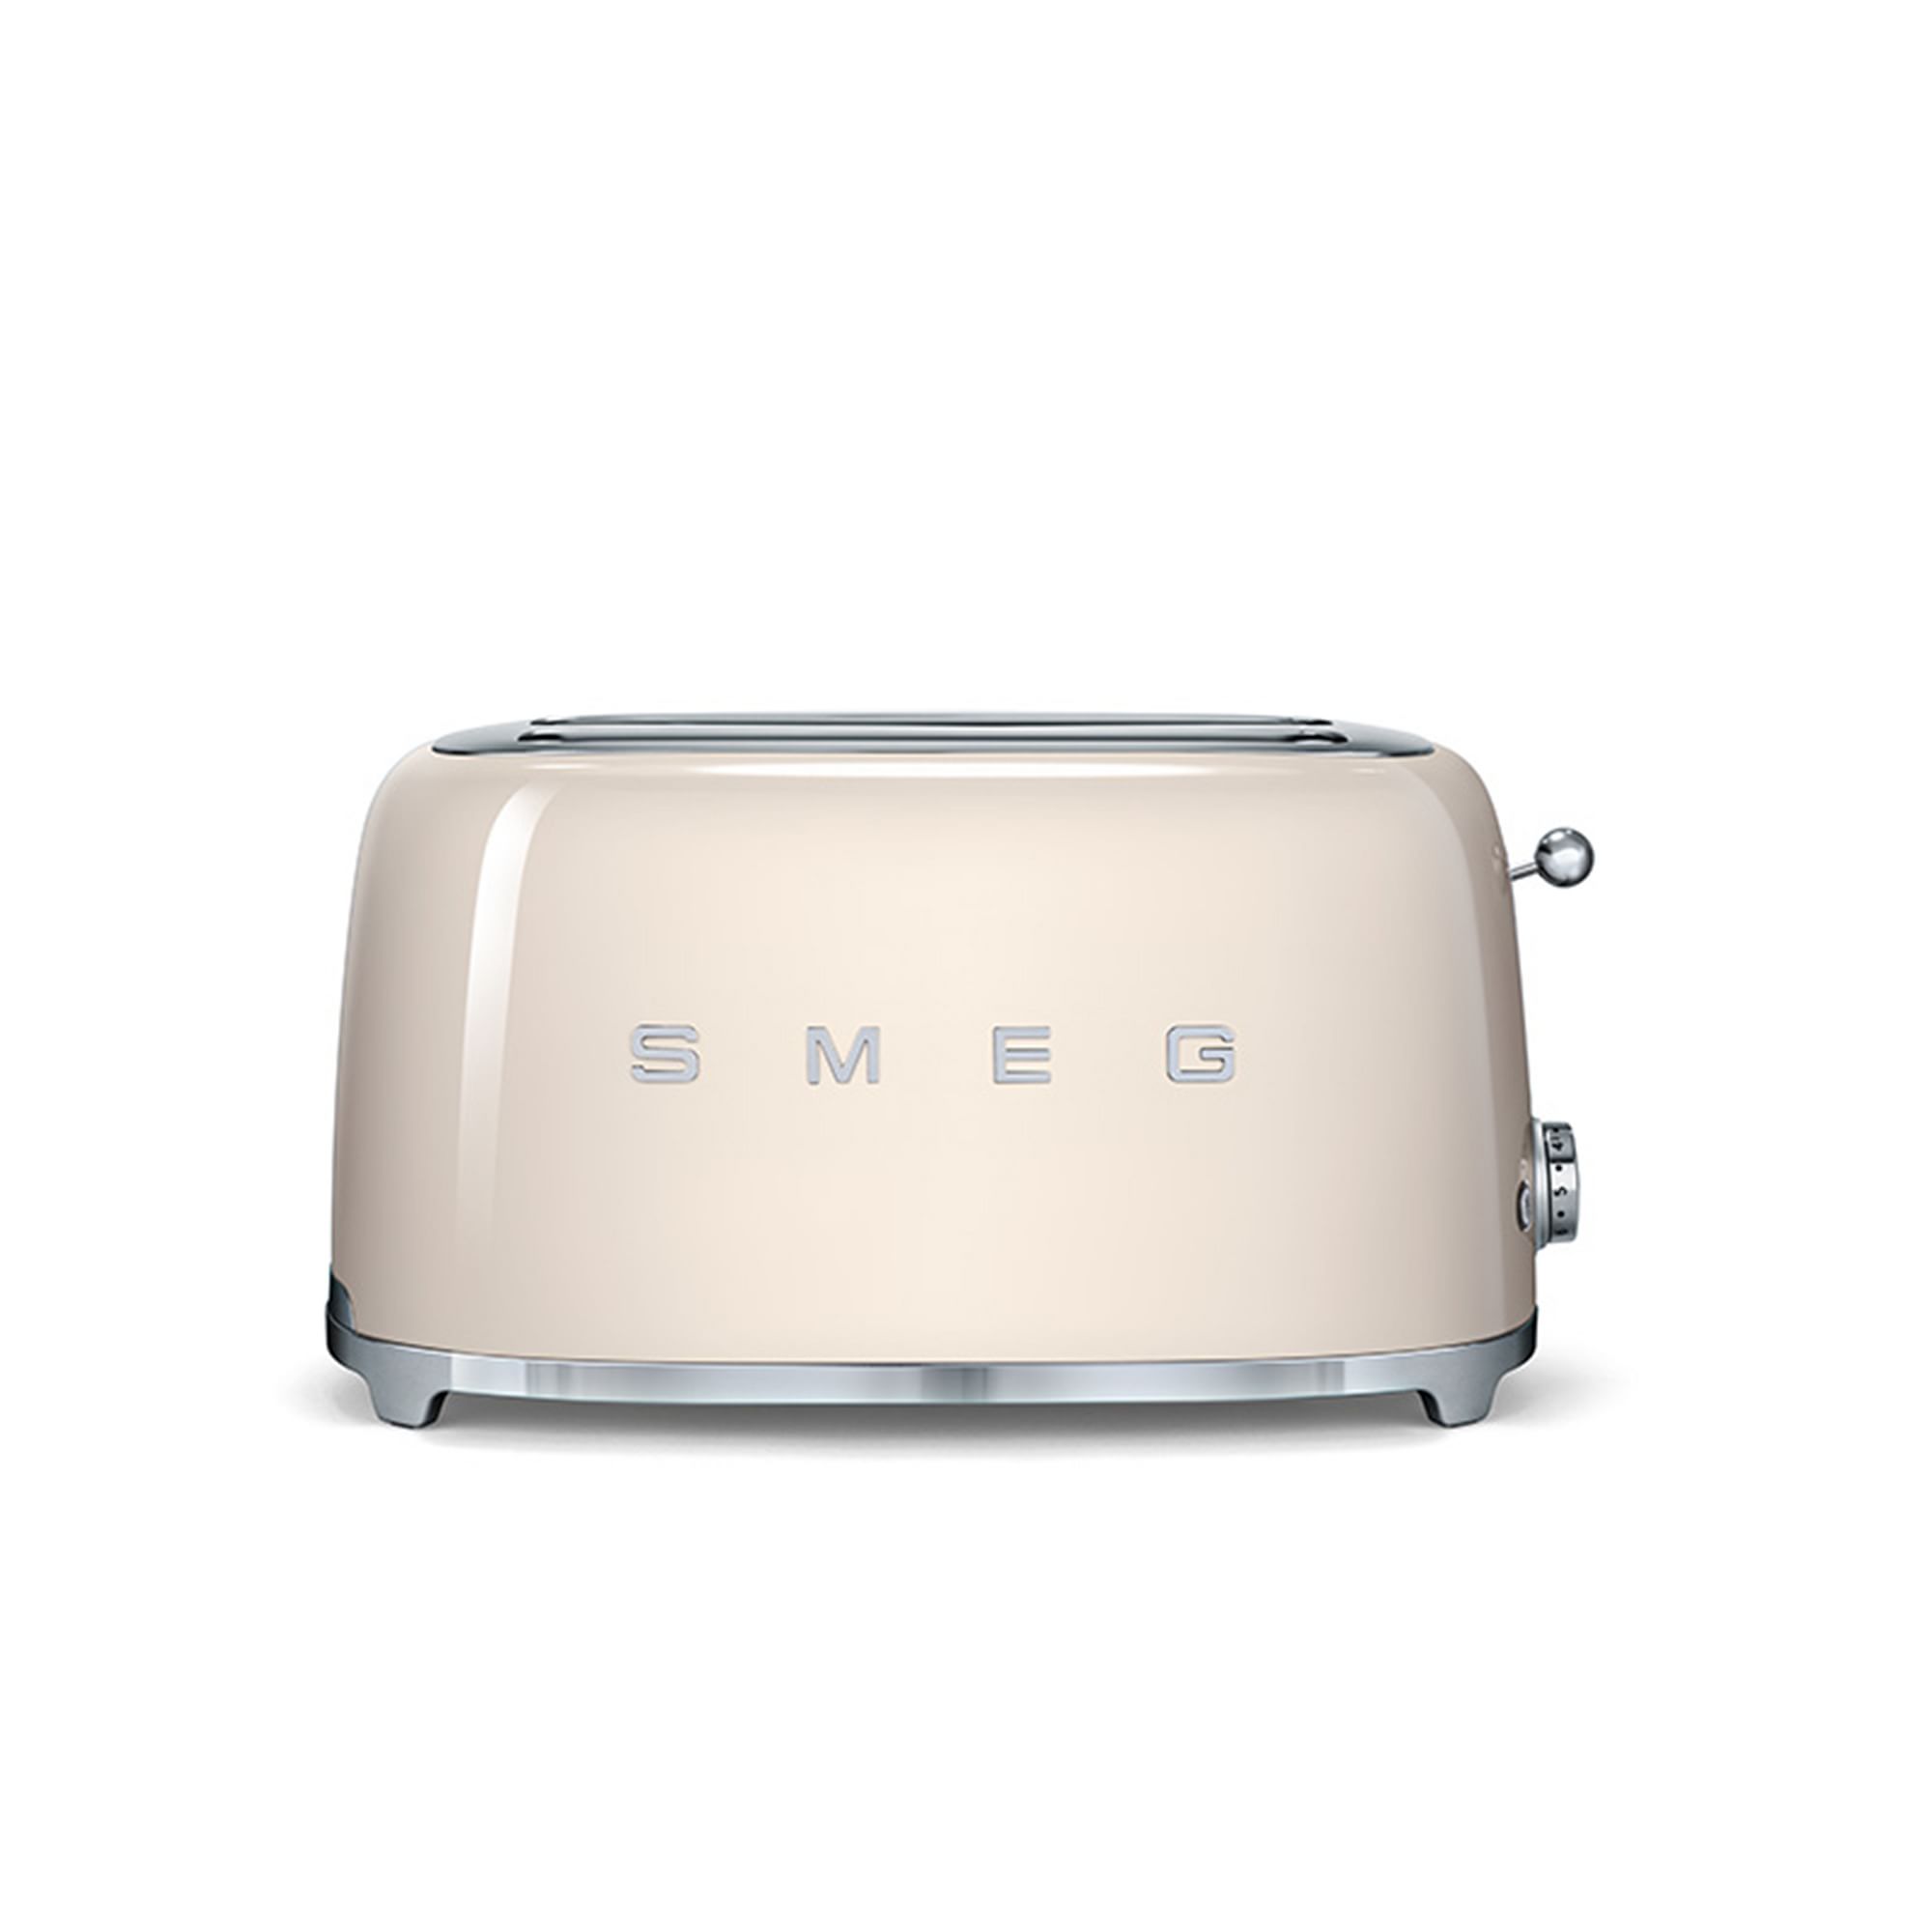 Smeg Toaster - 4 Slice | West Elm